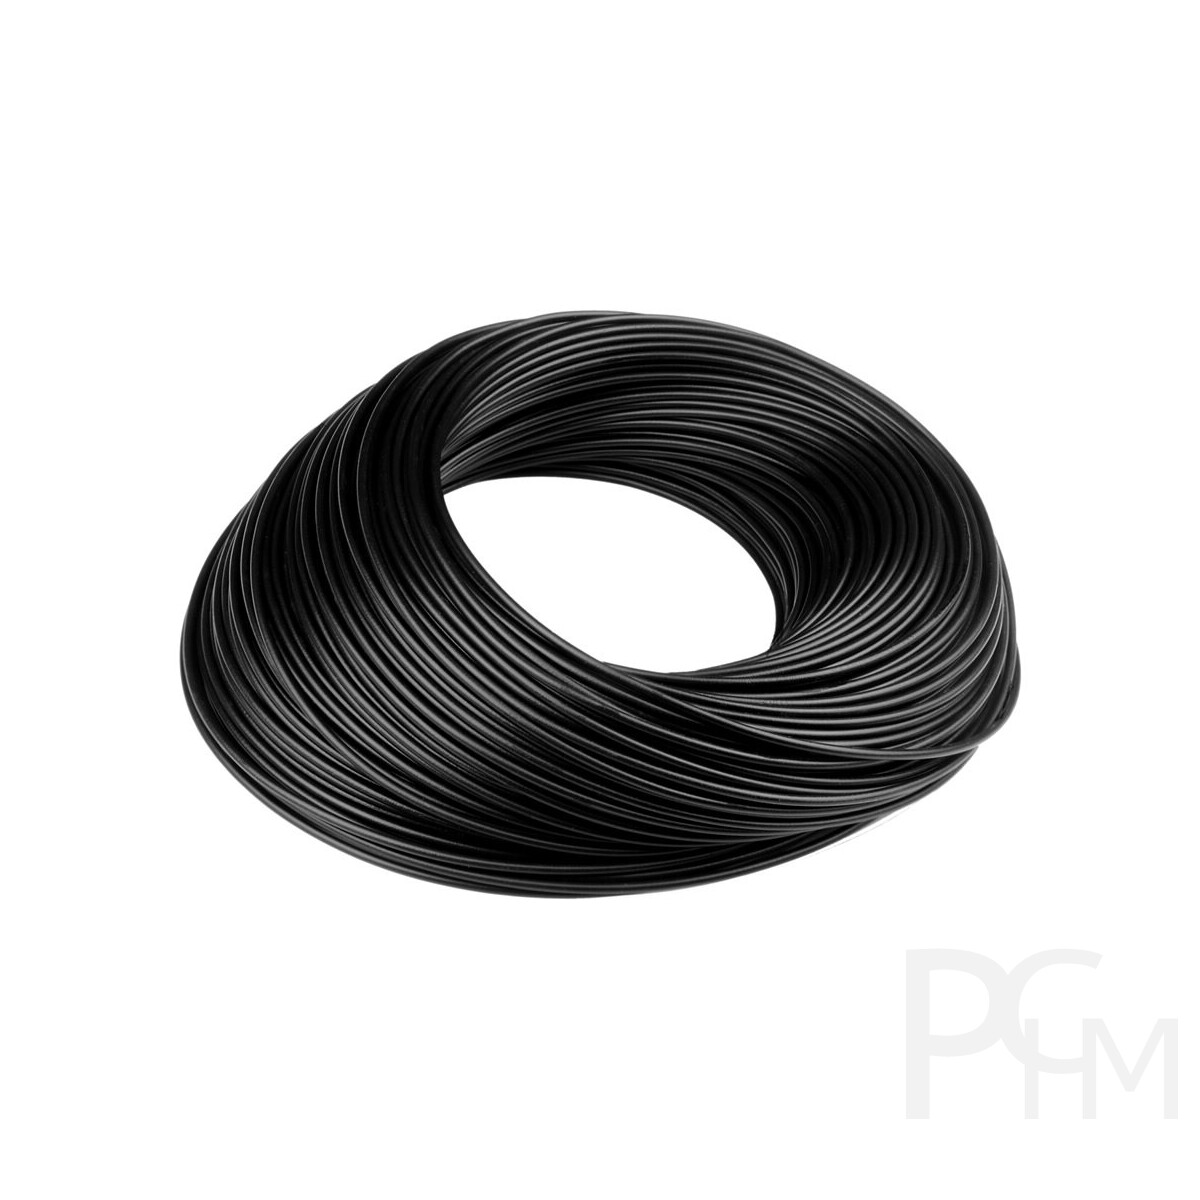 https://pchm.de/media/image/product/352/lg/litze-wire-i-einzelader-15mm.jpg